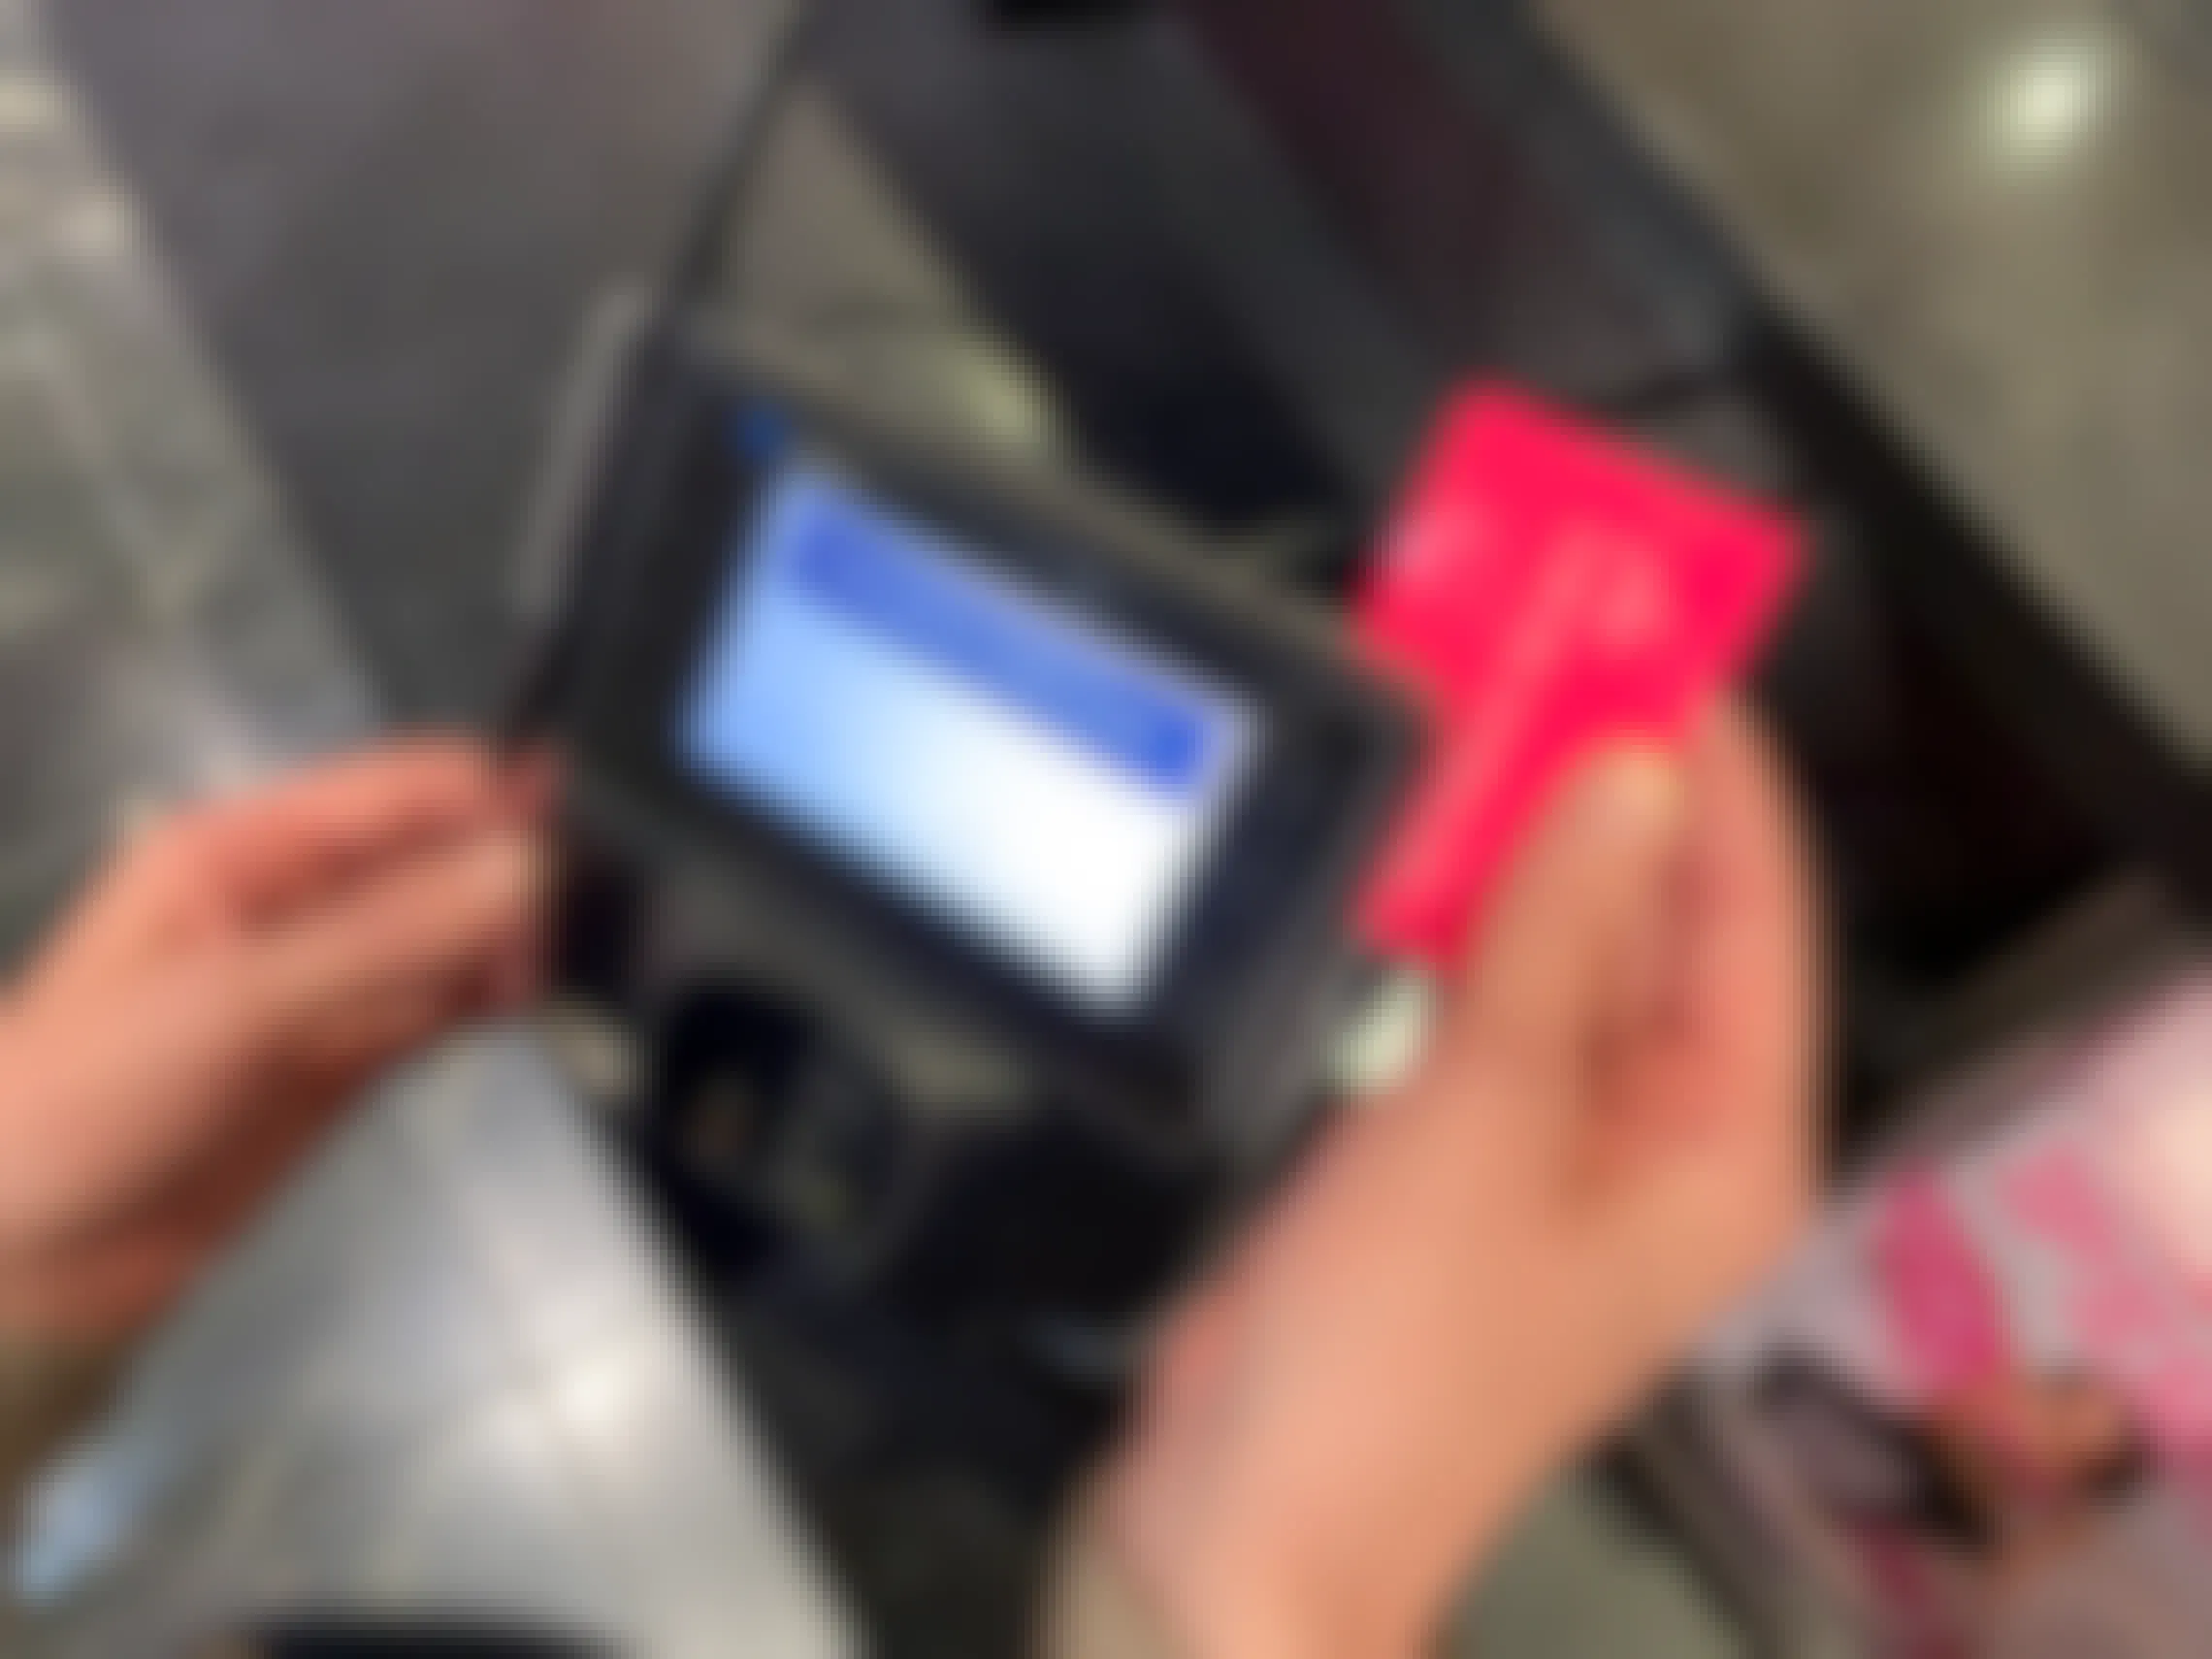 A woman sliding a Victoria's Secret Angel credit card through the credit card reader.